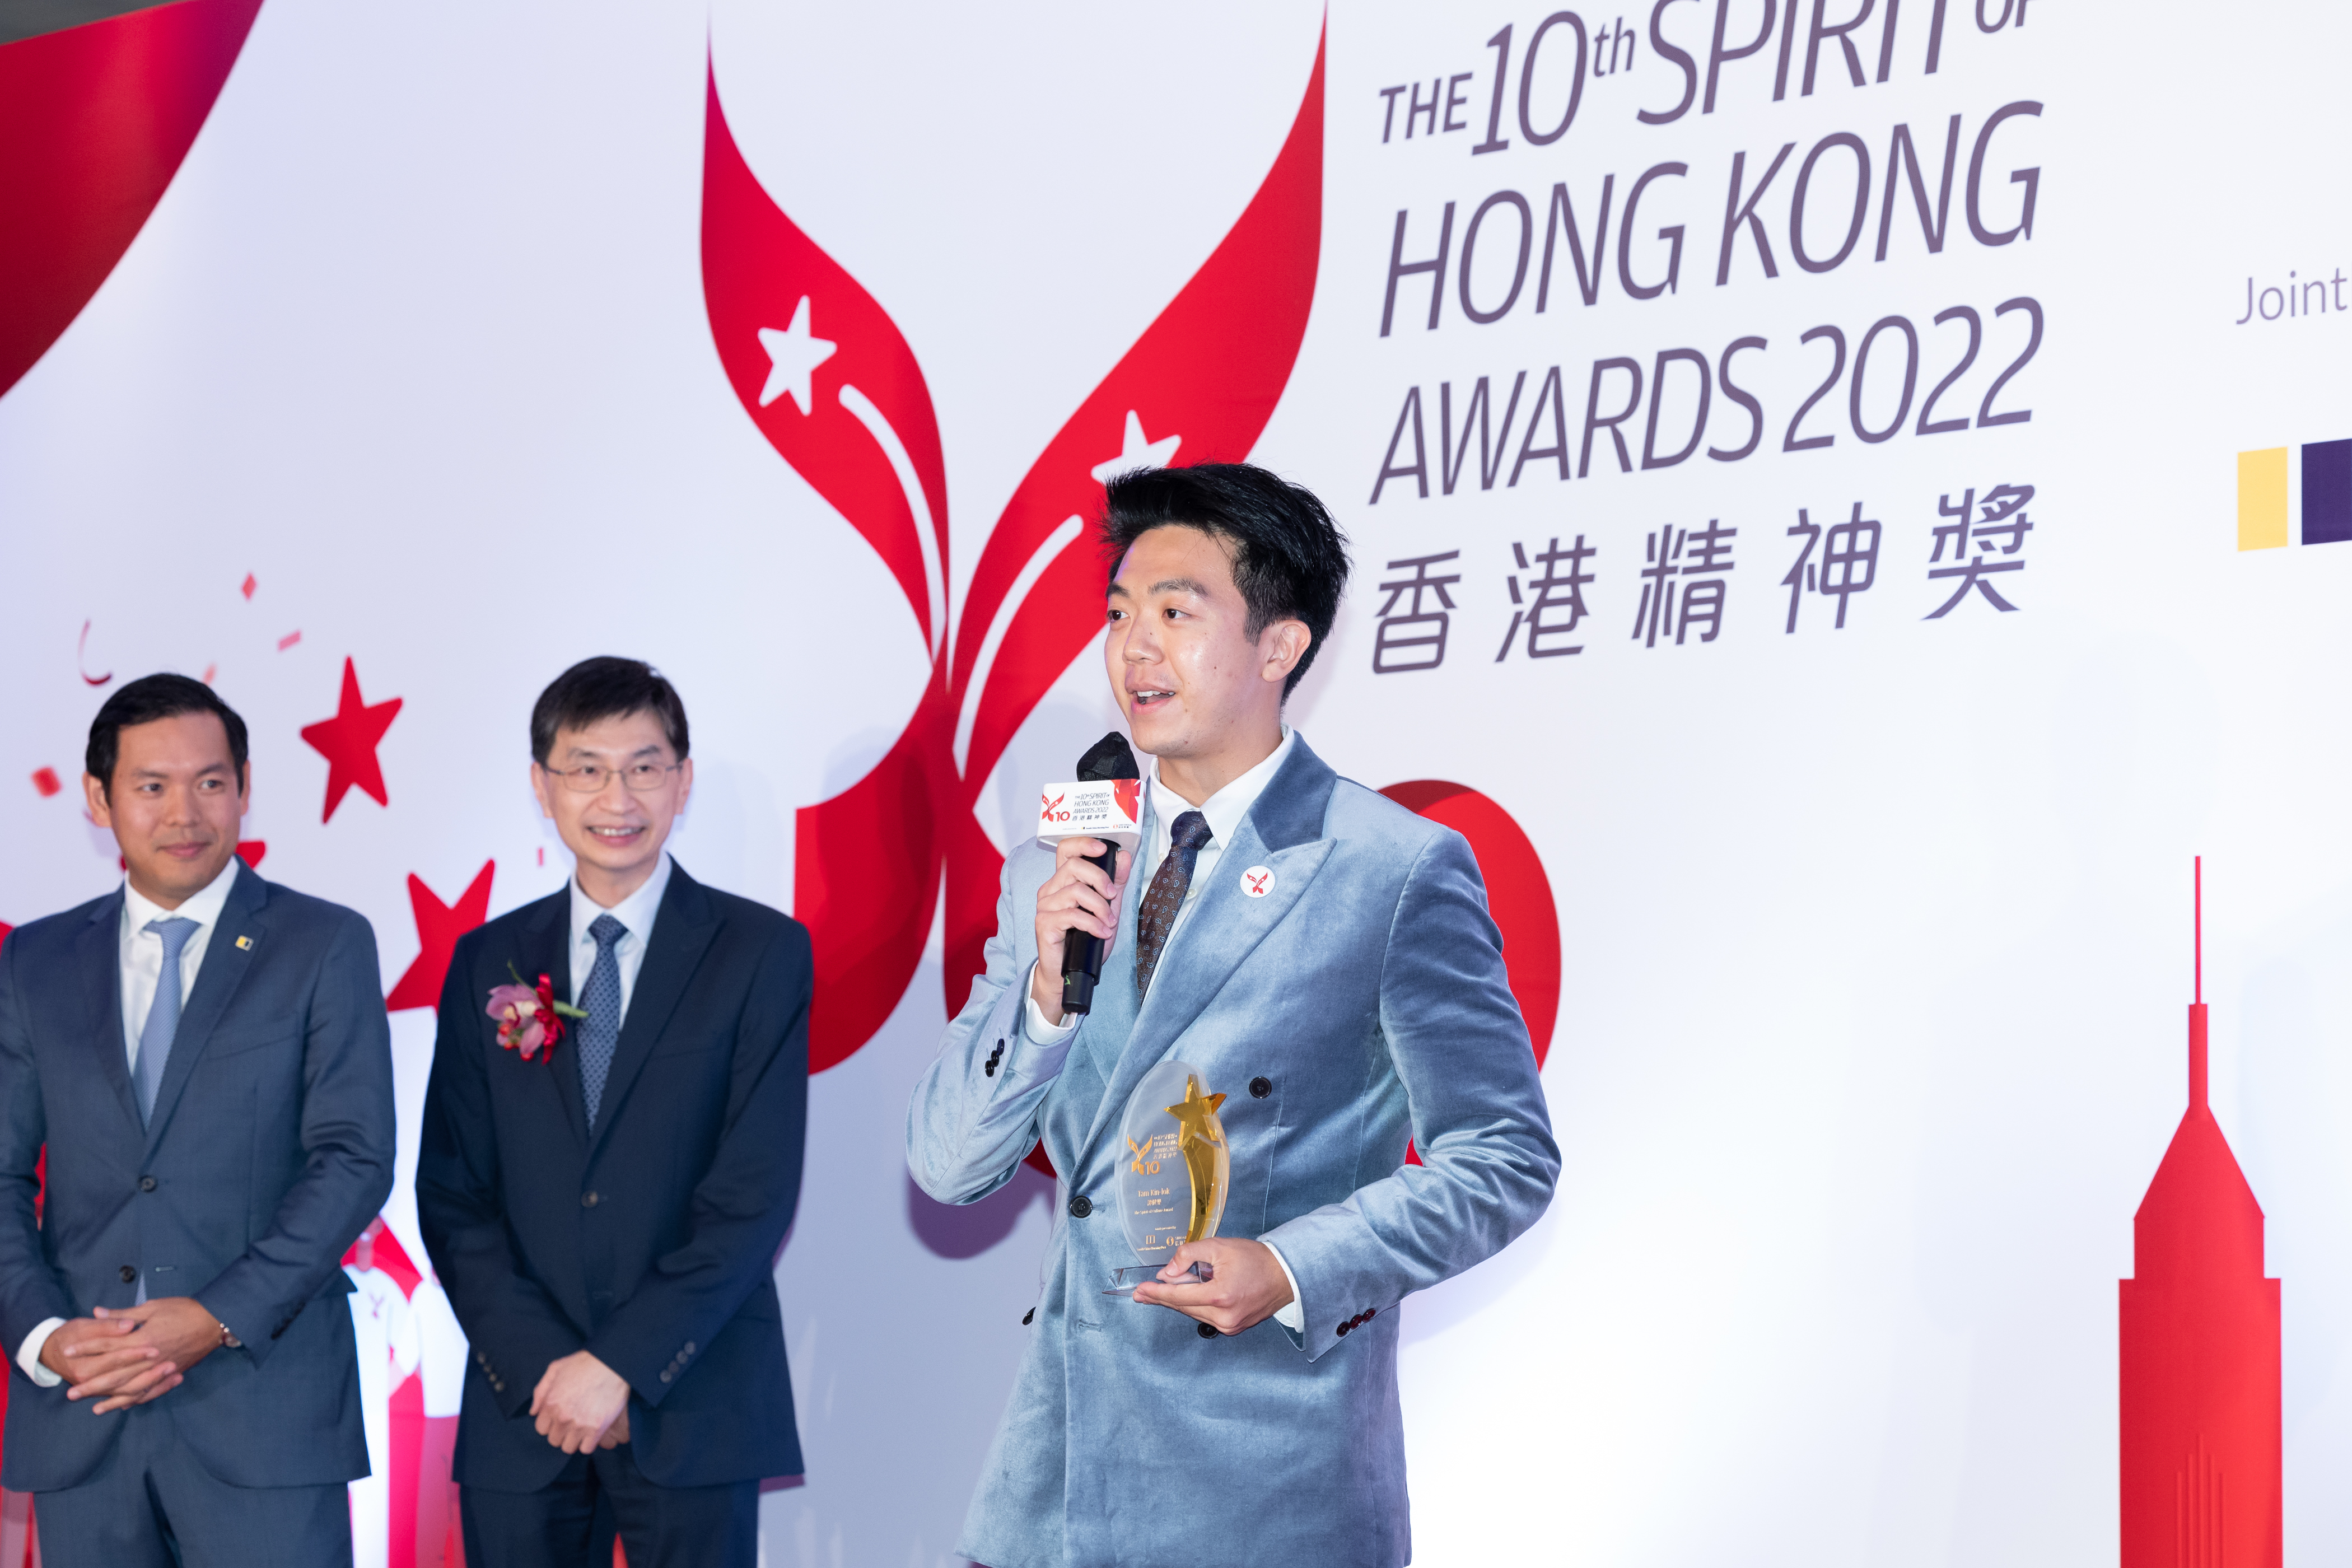 Spirit of Hong Kong Award 